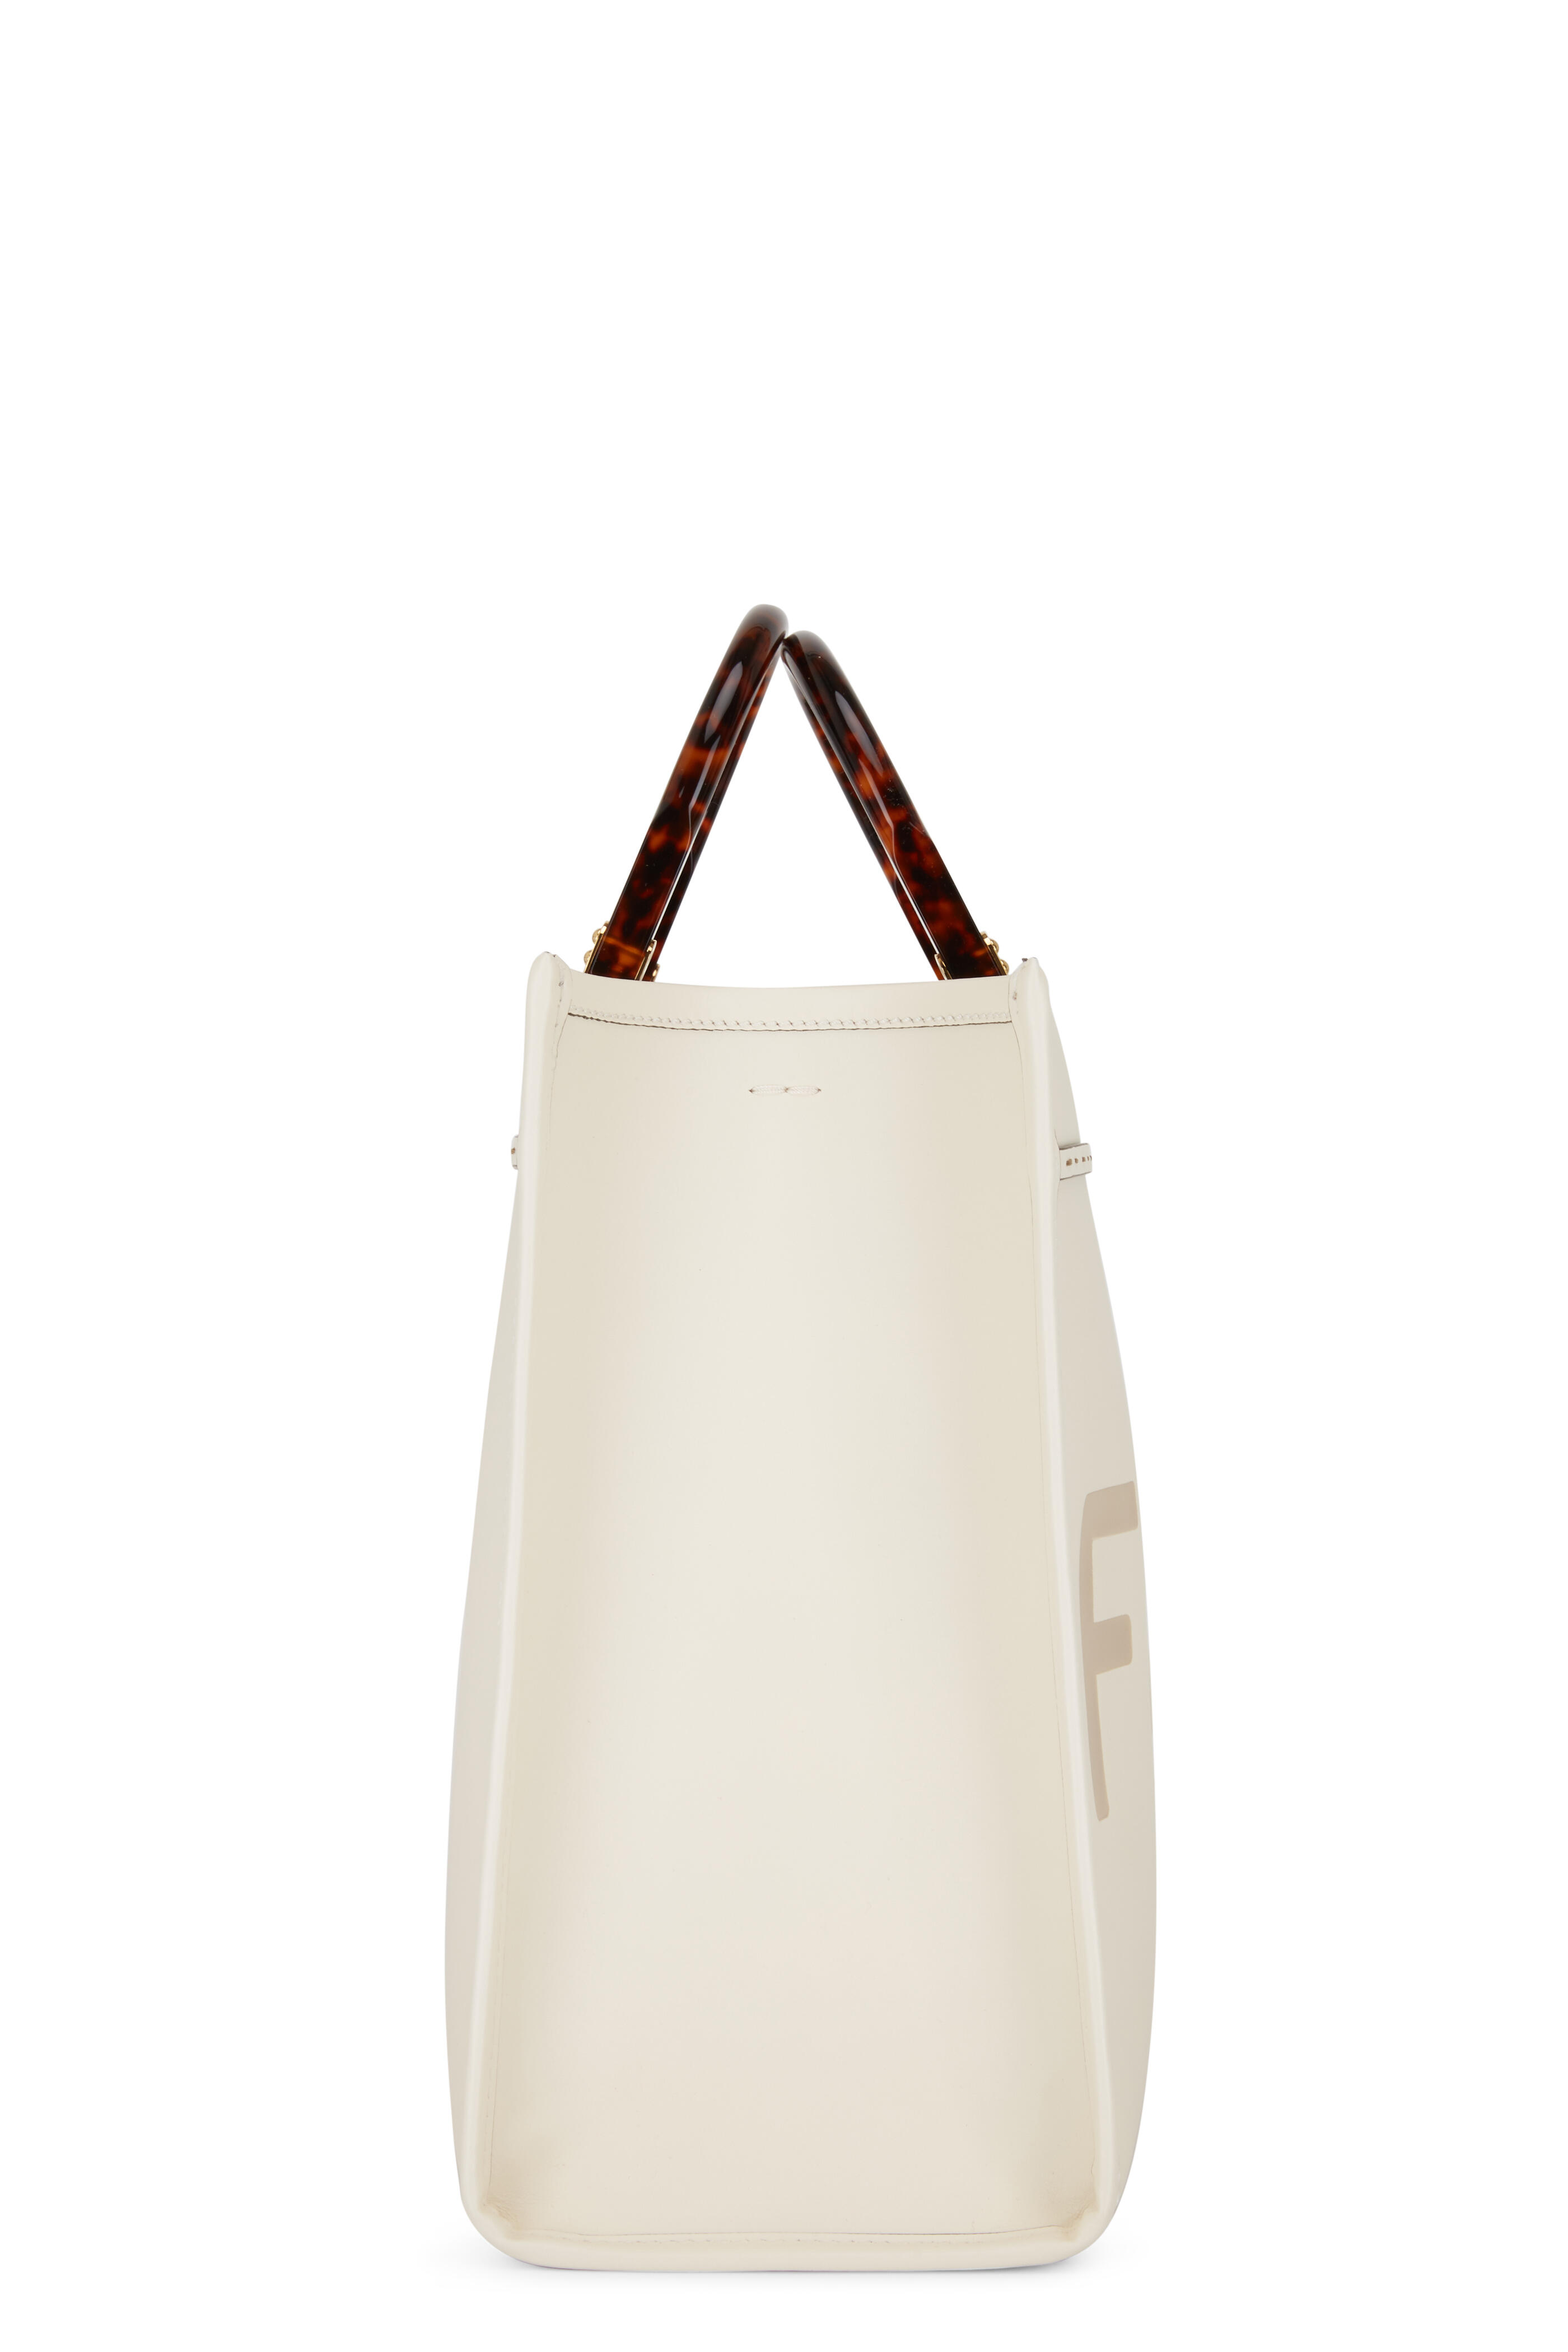 Fendi Handbag Under $1000 (Fendi Basket Bag Review) 